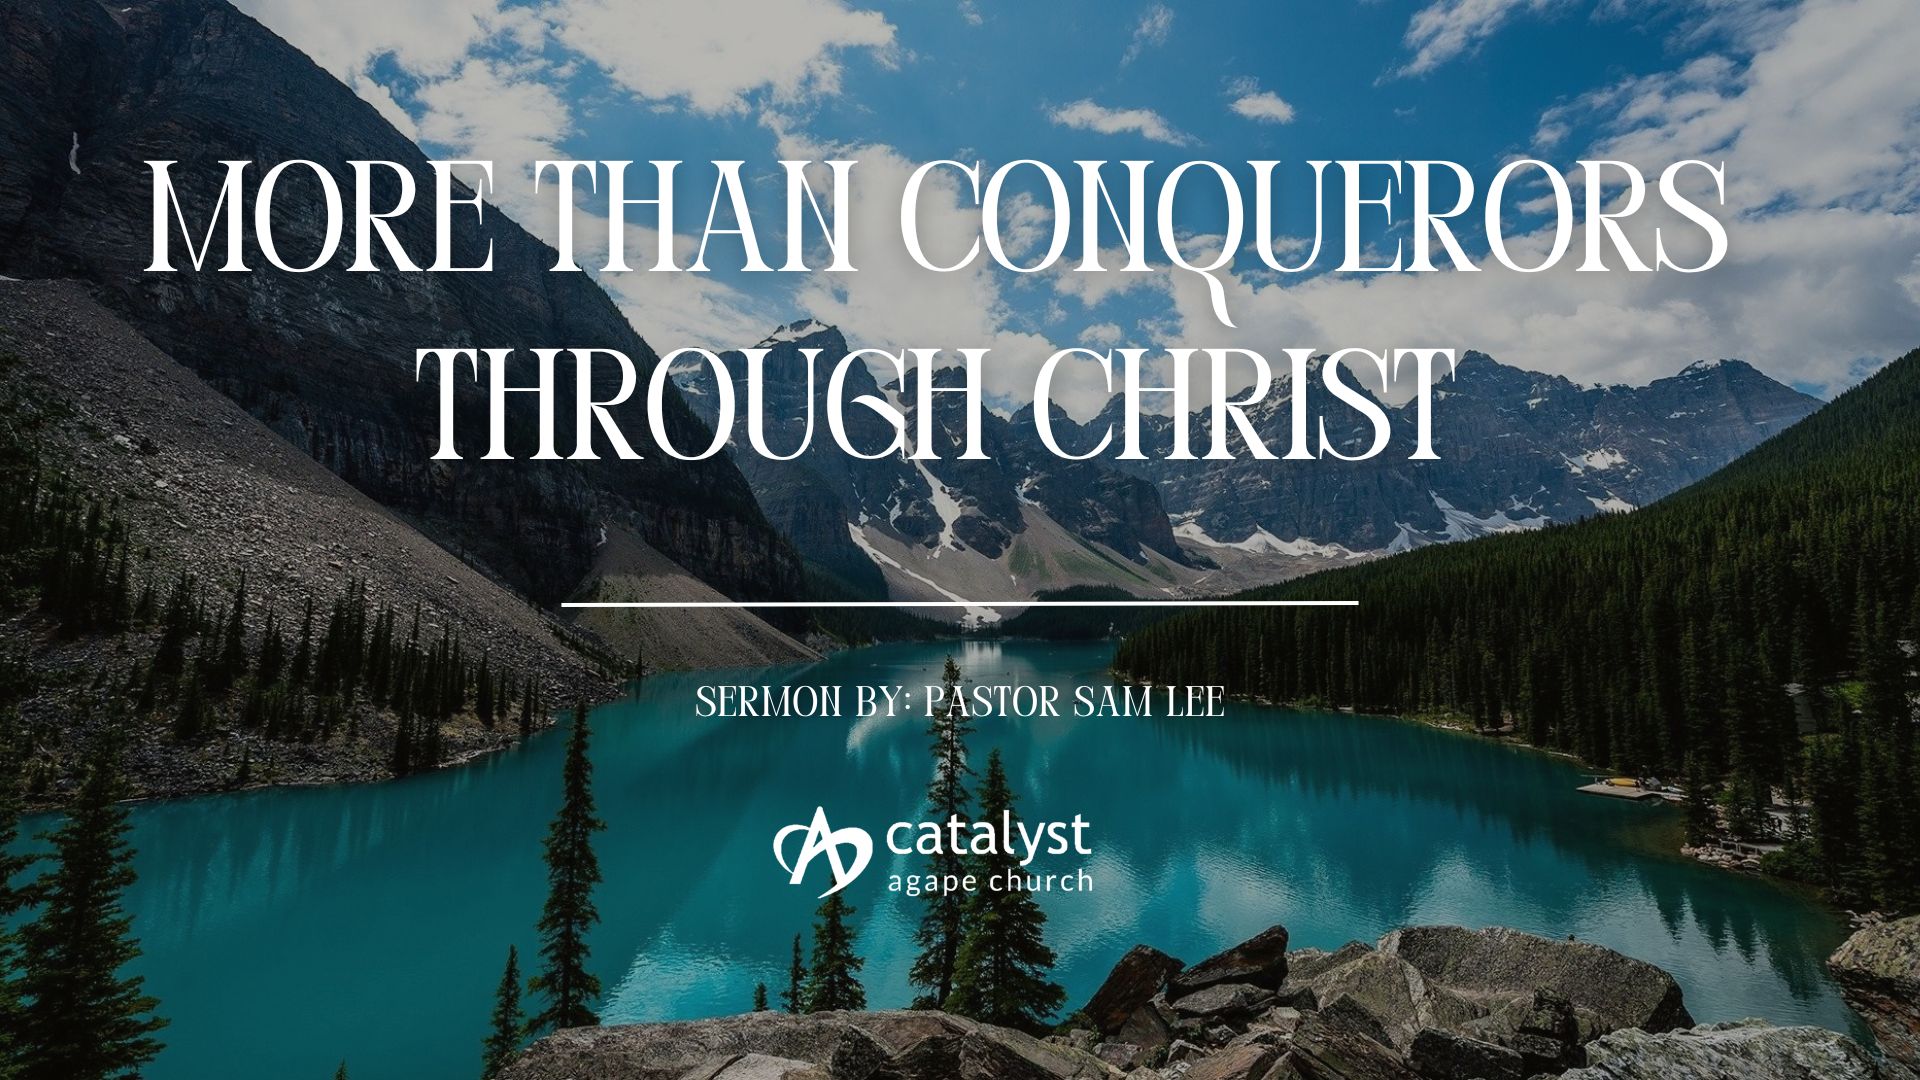 More Than Conquerors Through Christ